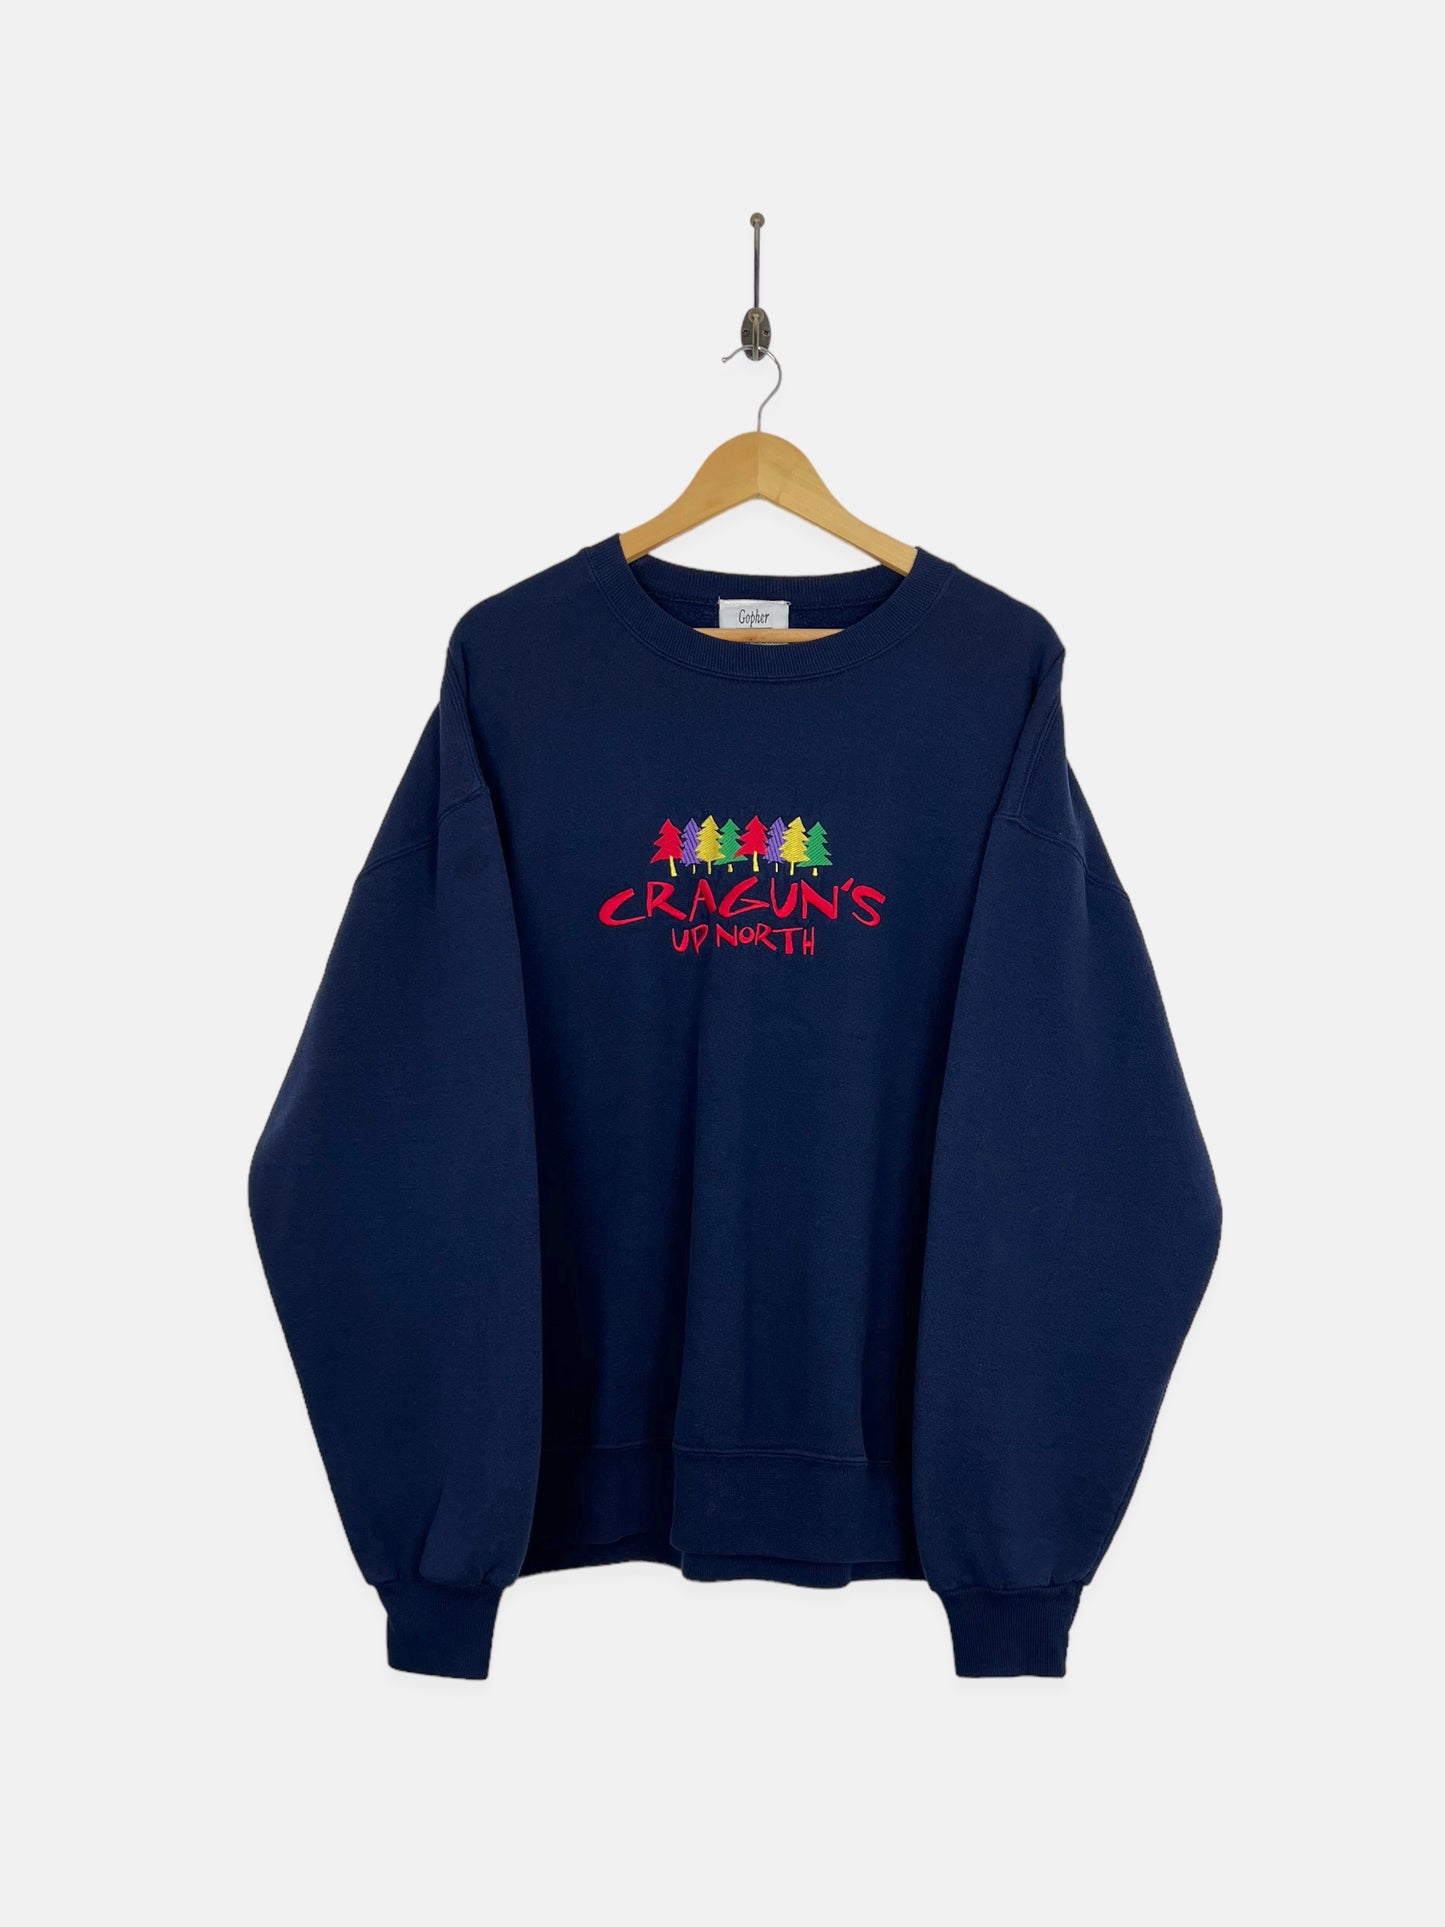 90's Craguns Up North USA Made Embroidered Vintage Sweatshirt Size XL